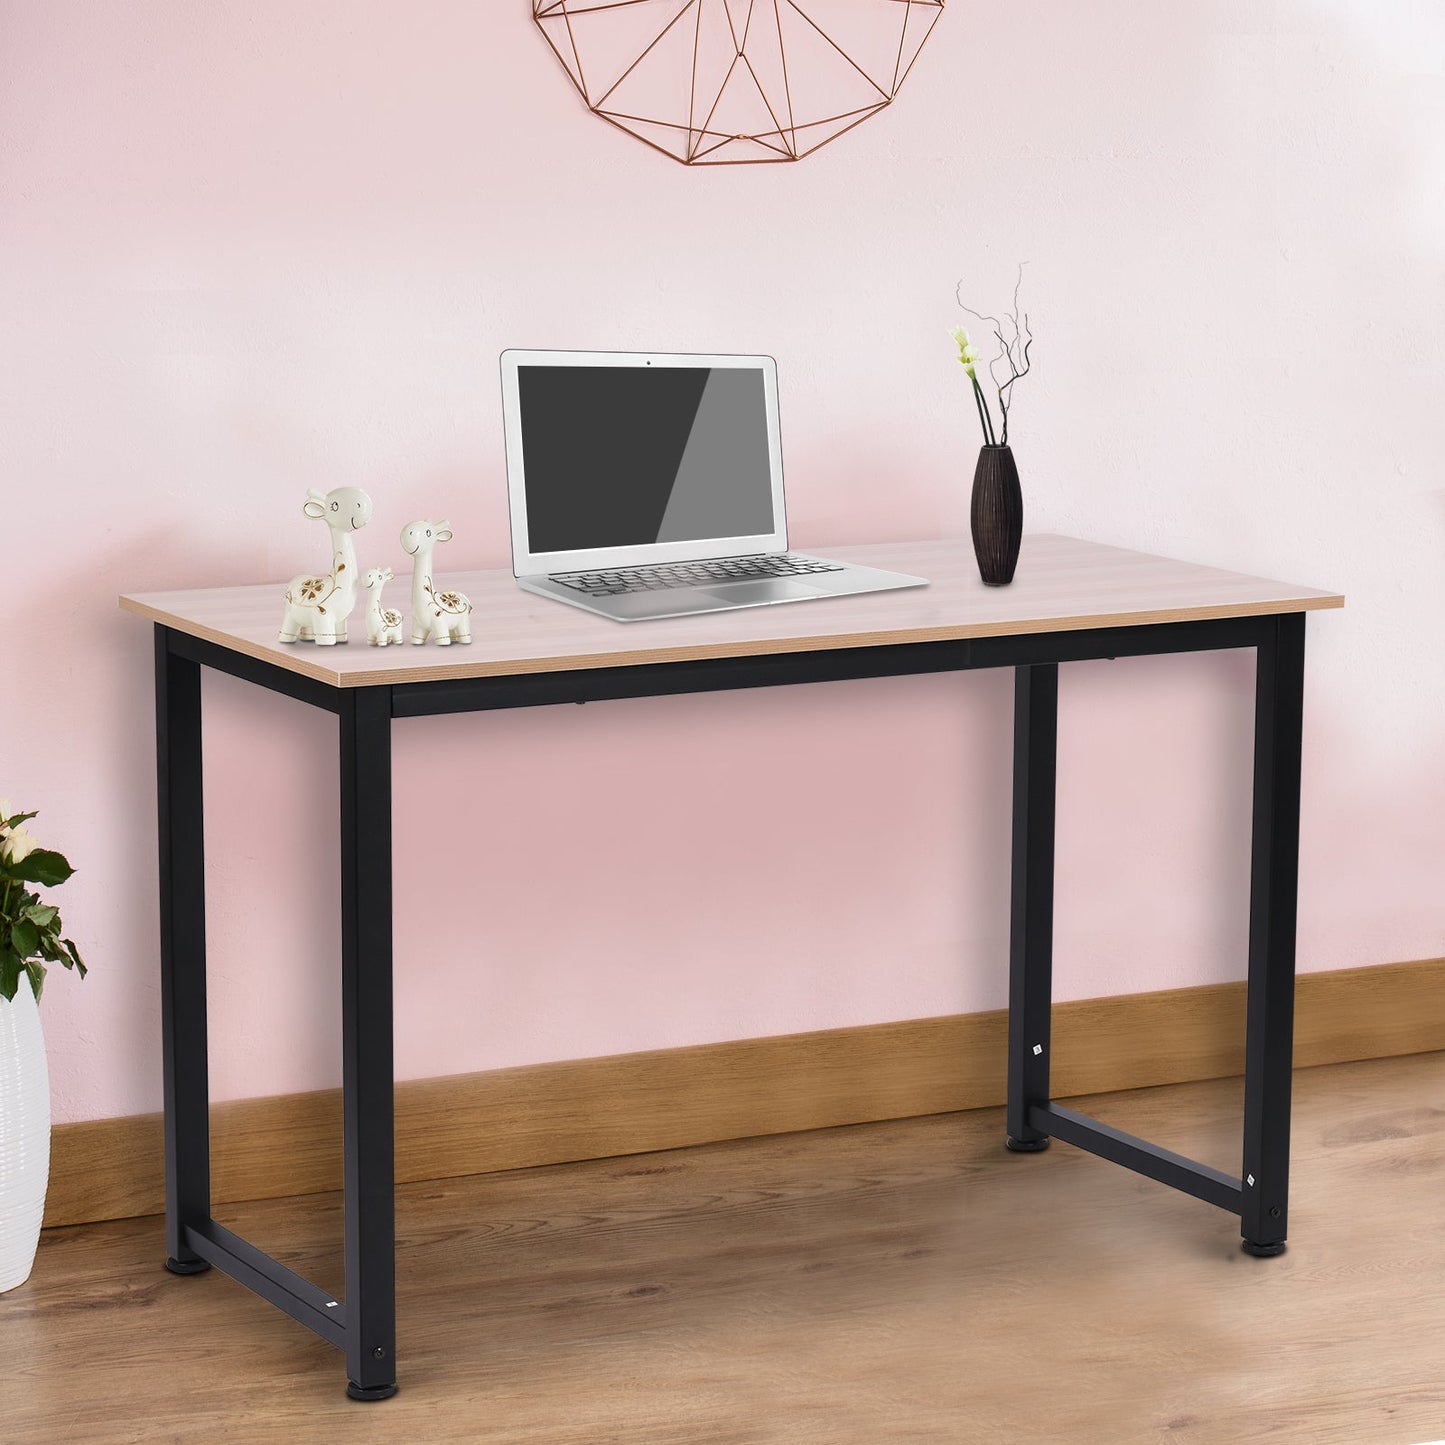 HOMCOM Computer Desk PC Writing Table Home Office Workstation Adjustable Feet Stable Work Study w/ Metal Frame Oak Black